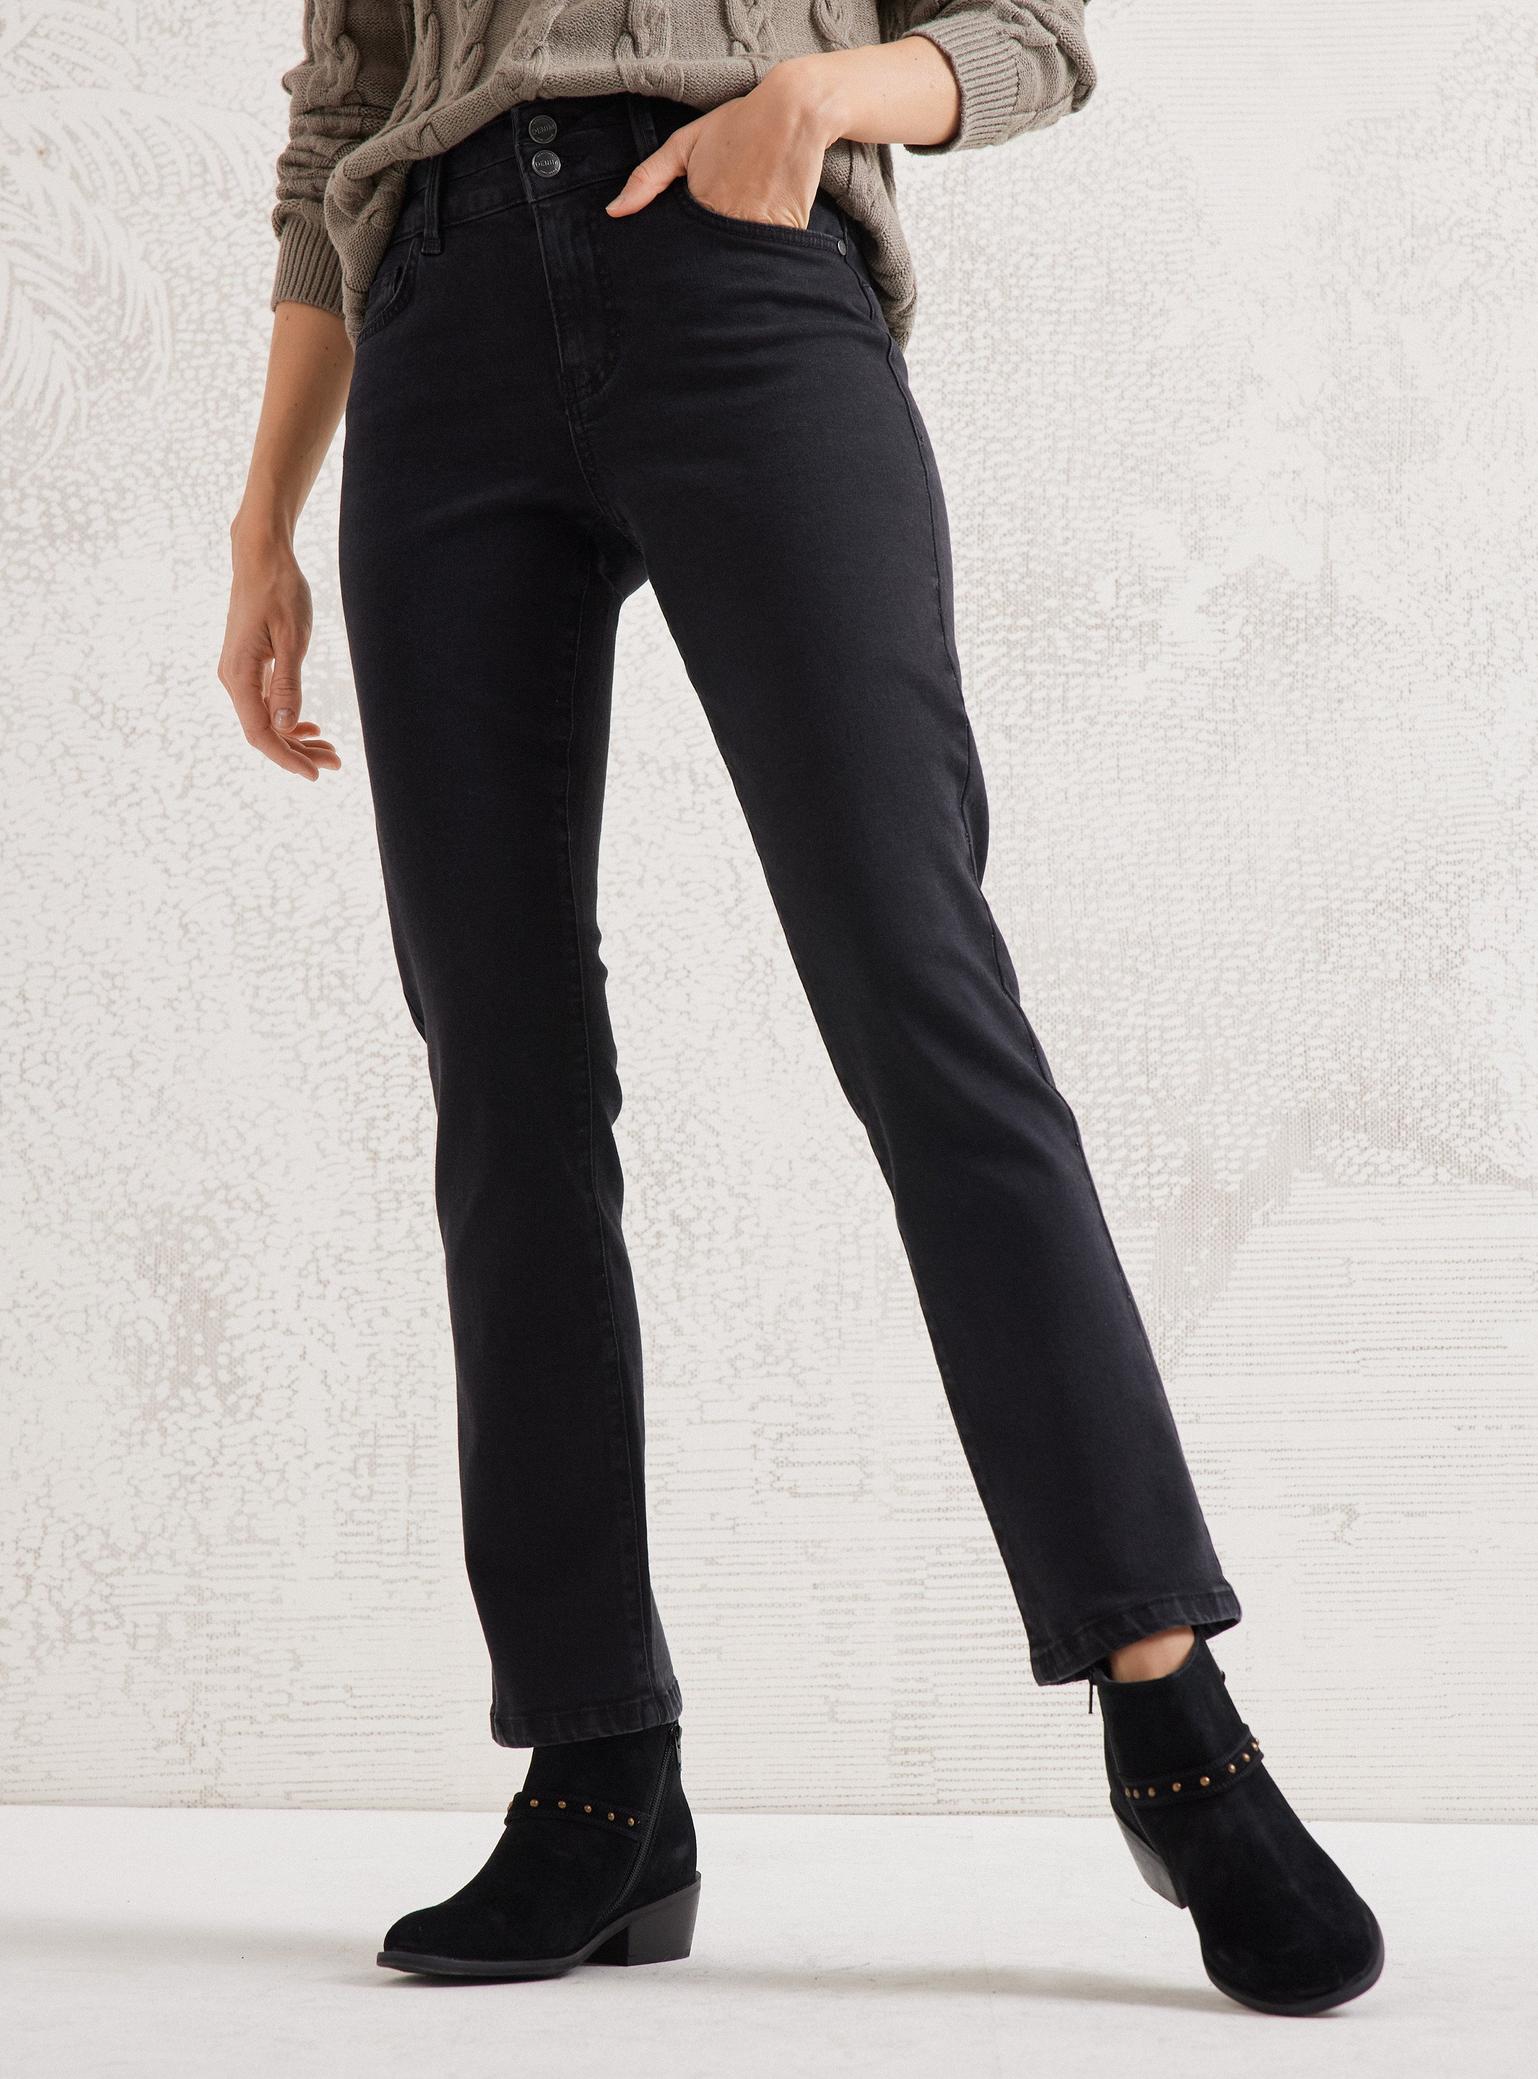 Oferta de Jeans Recto Push Up por $20990 en Paris